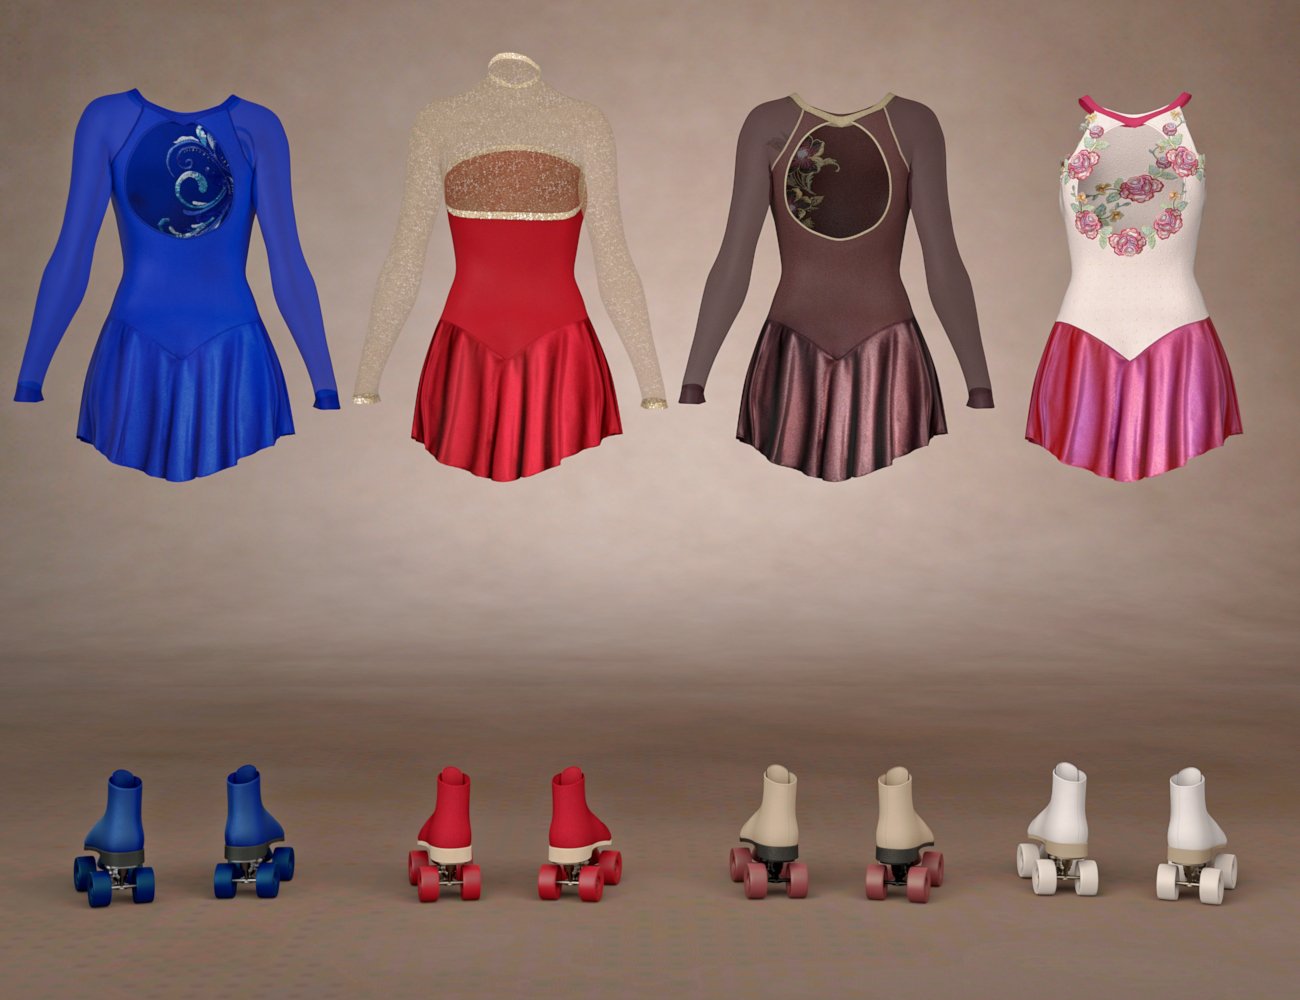 dForce Figure Skater Outfit Textures by: Sarsa, 3D Models by Daz 3D